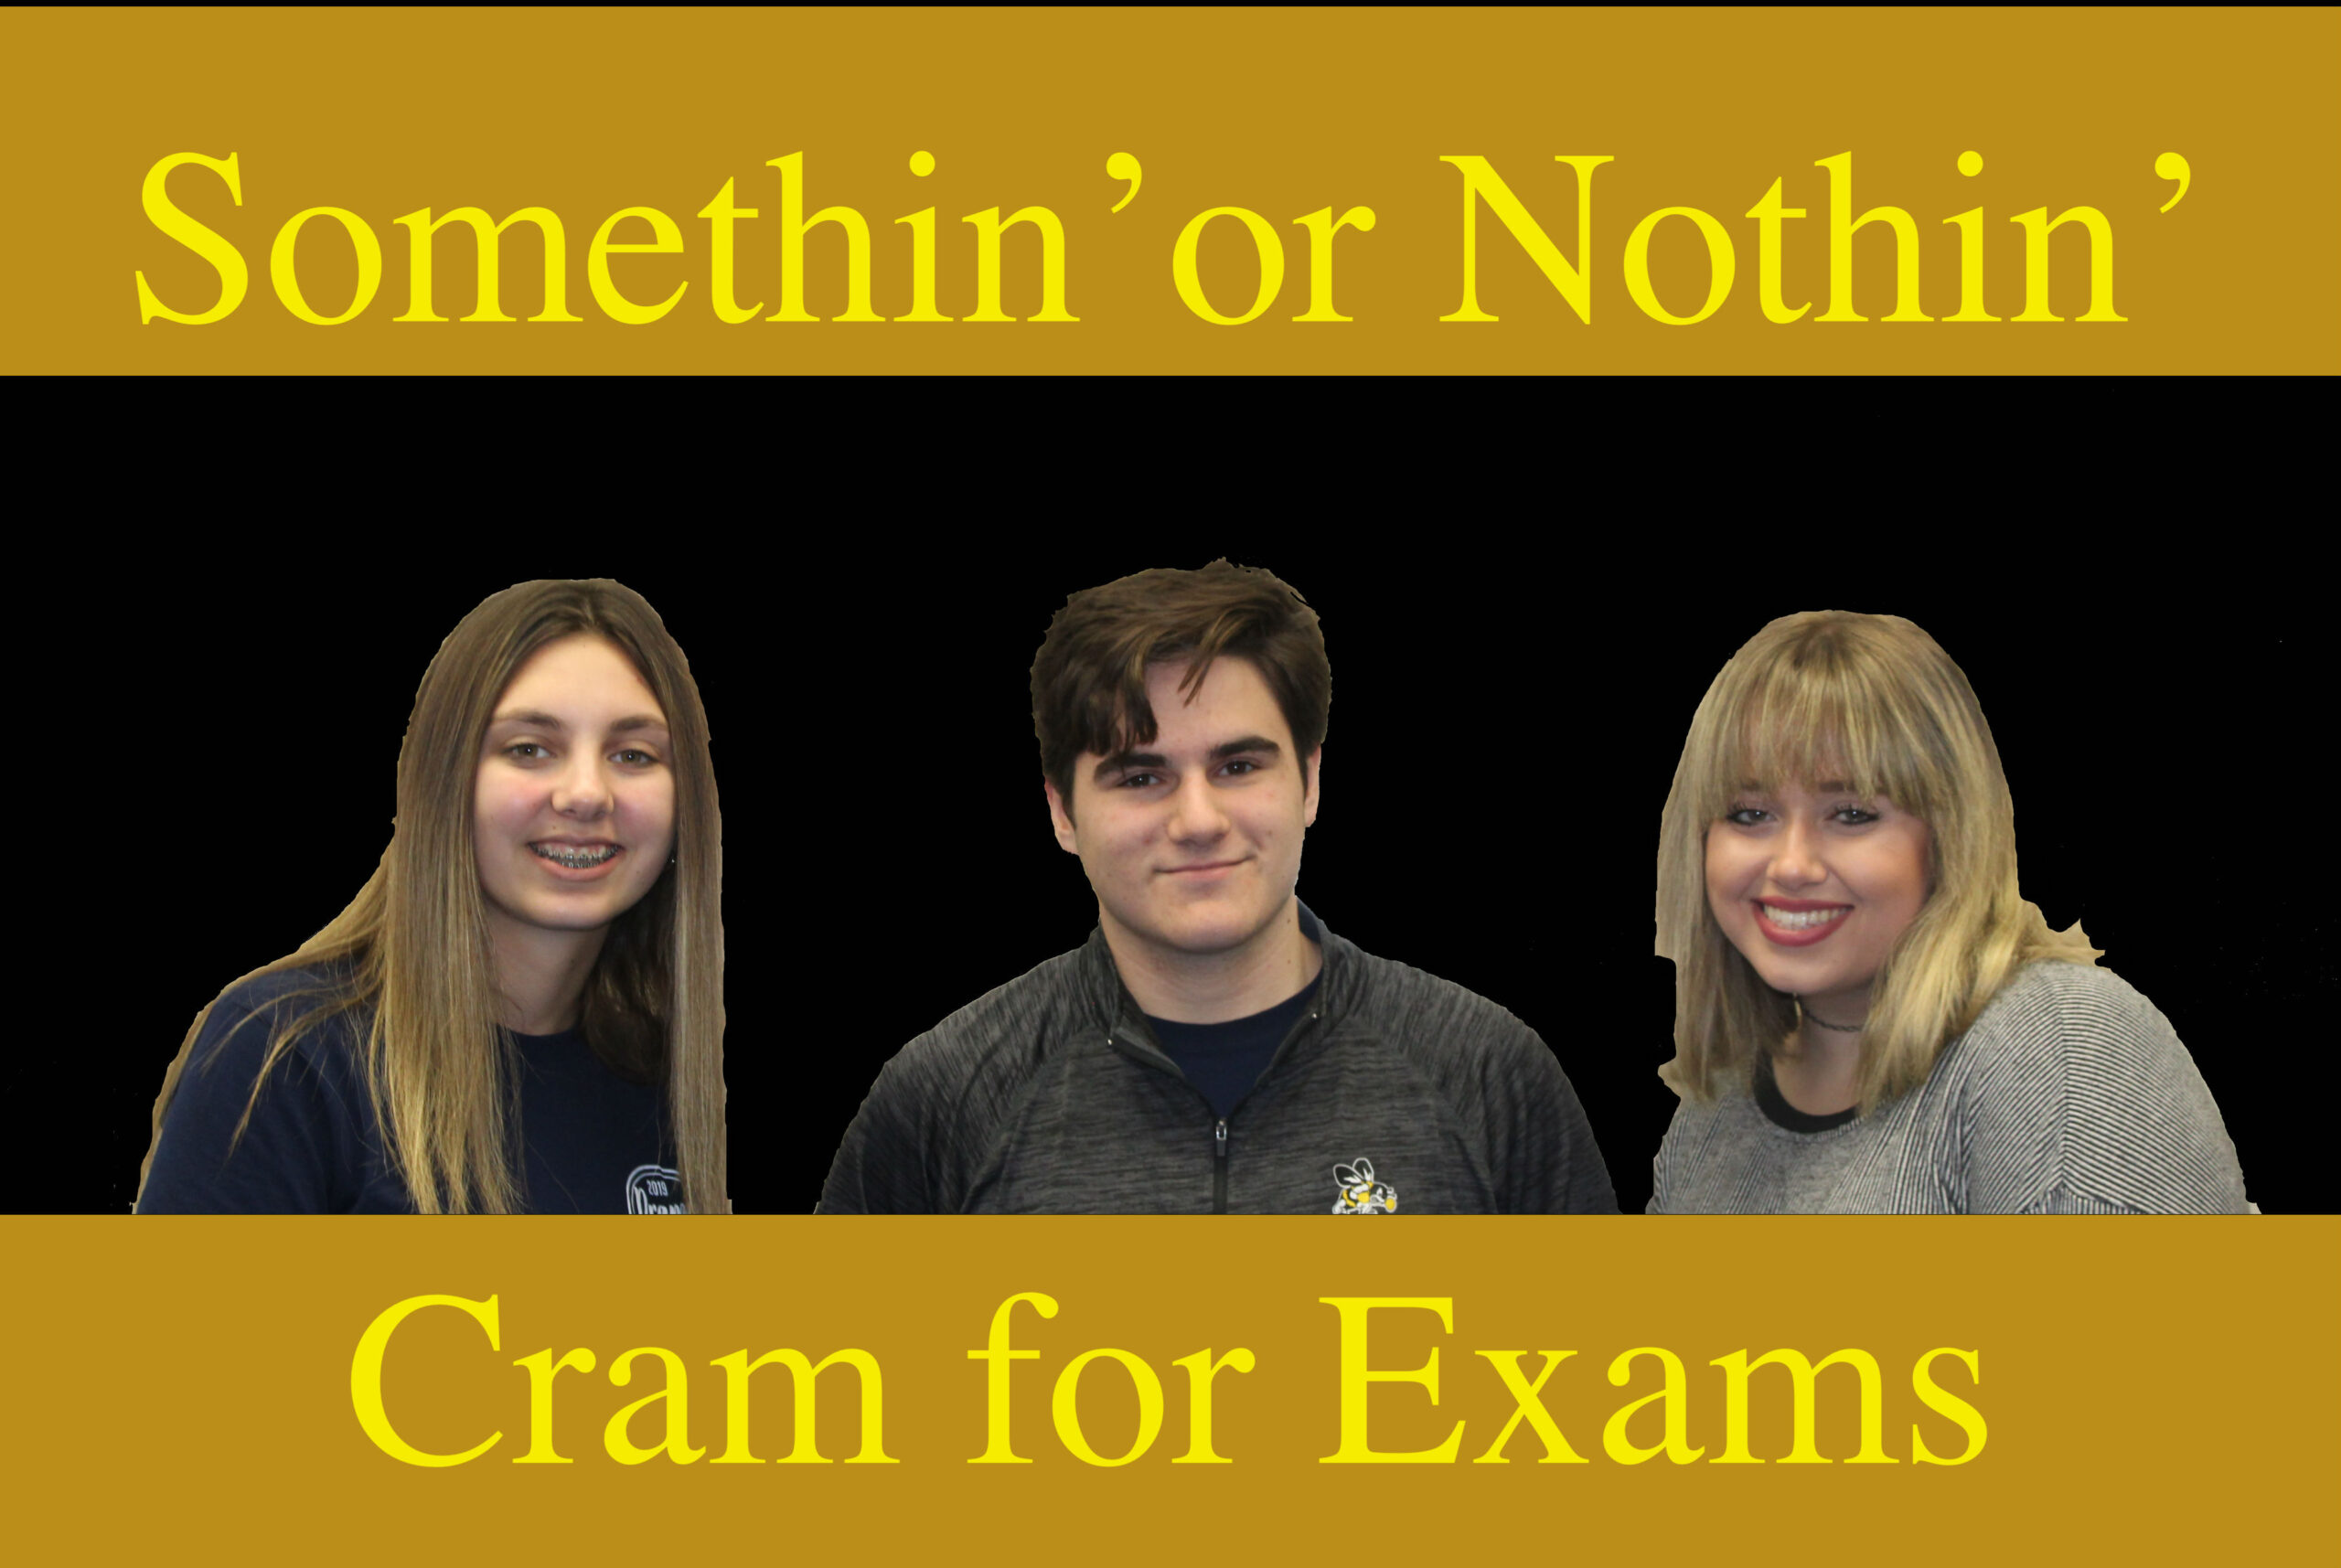 Somethin’ or Nothin’: Don’t cram for exams